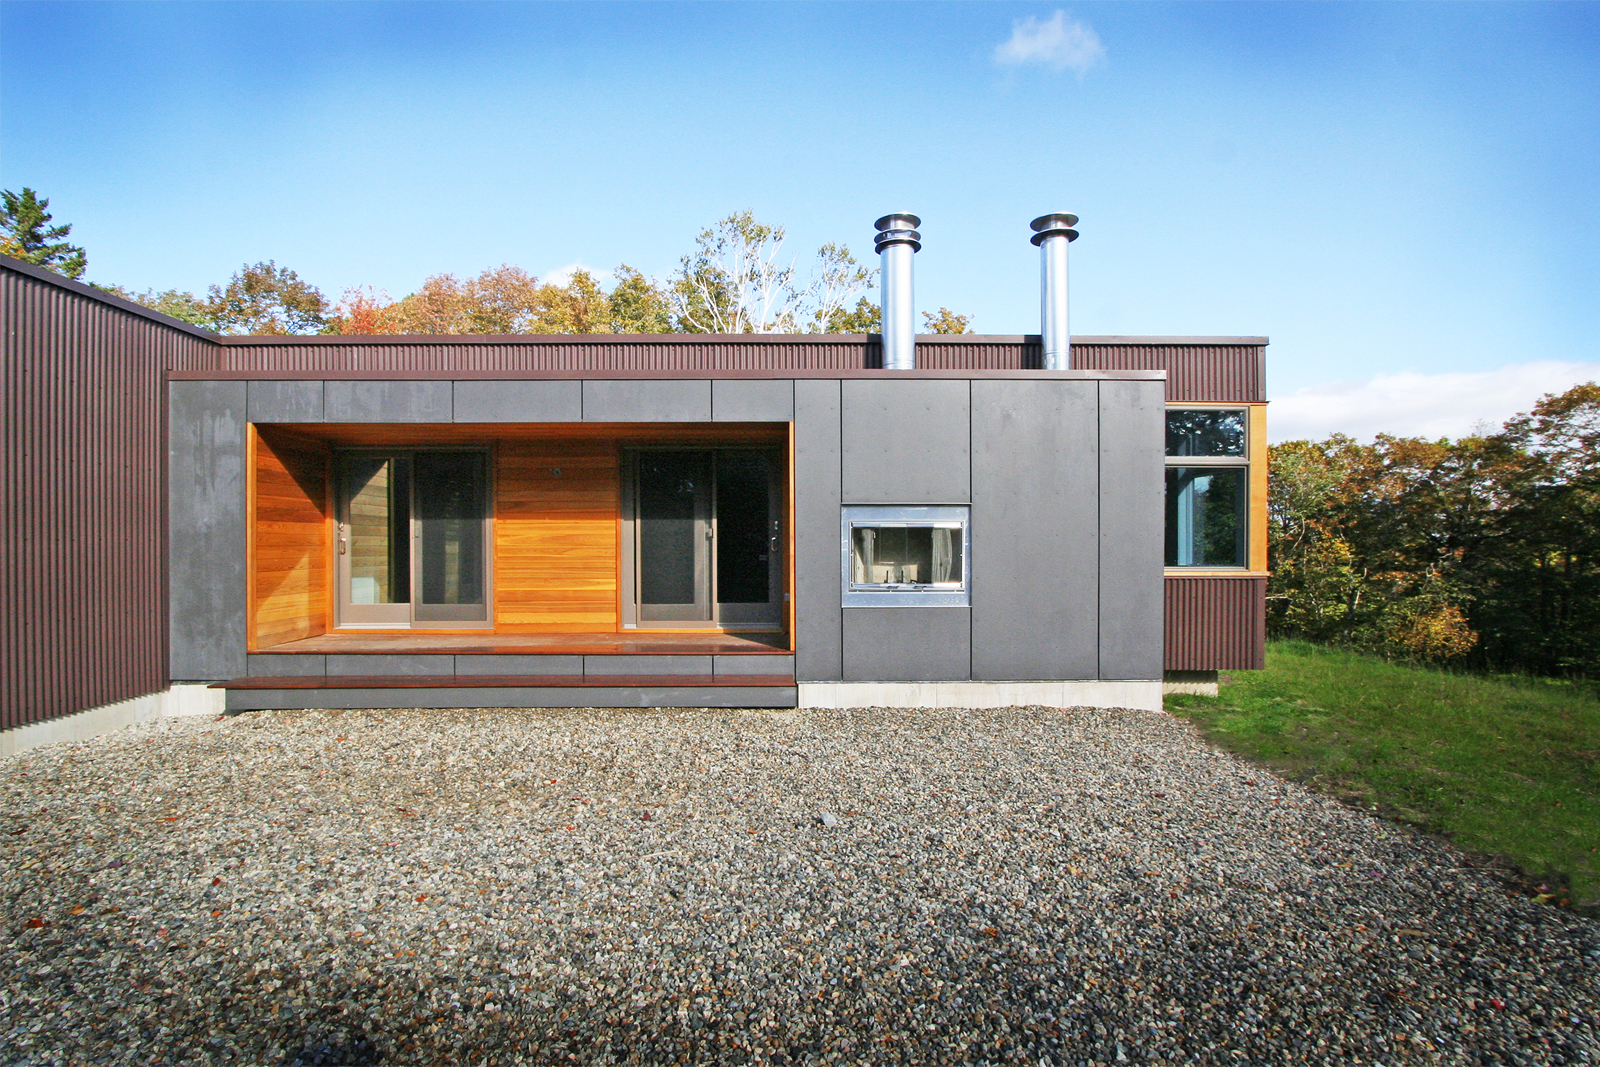 05-res4-resolution-4-architecture-modern-modular-home-prefab-house-vermont-cabin-exterior.jpg